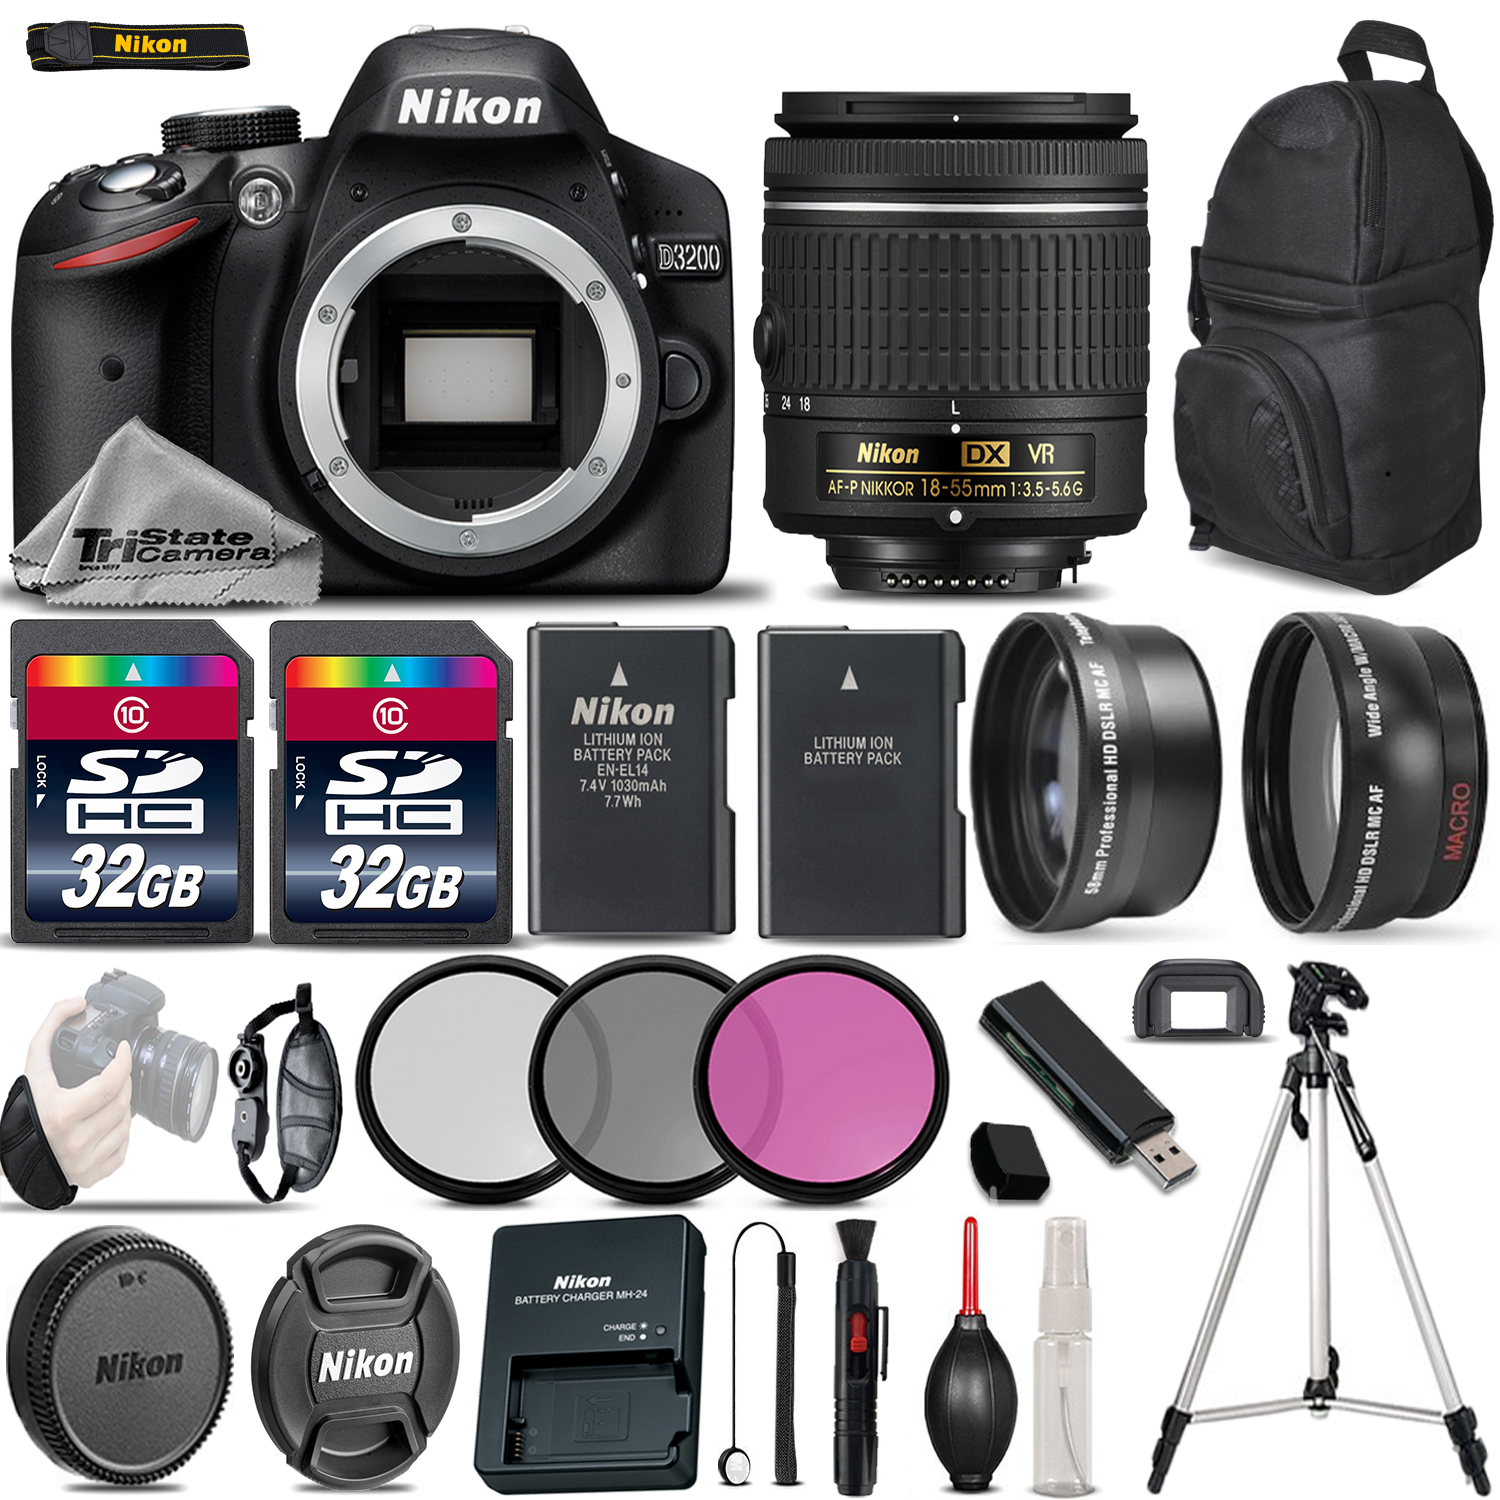 D3200 Digital SLR Camera + 3 Lens 18-55mm VR + 64GB -Great Saving Full Kit *FREE SHIPPING*